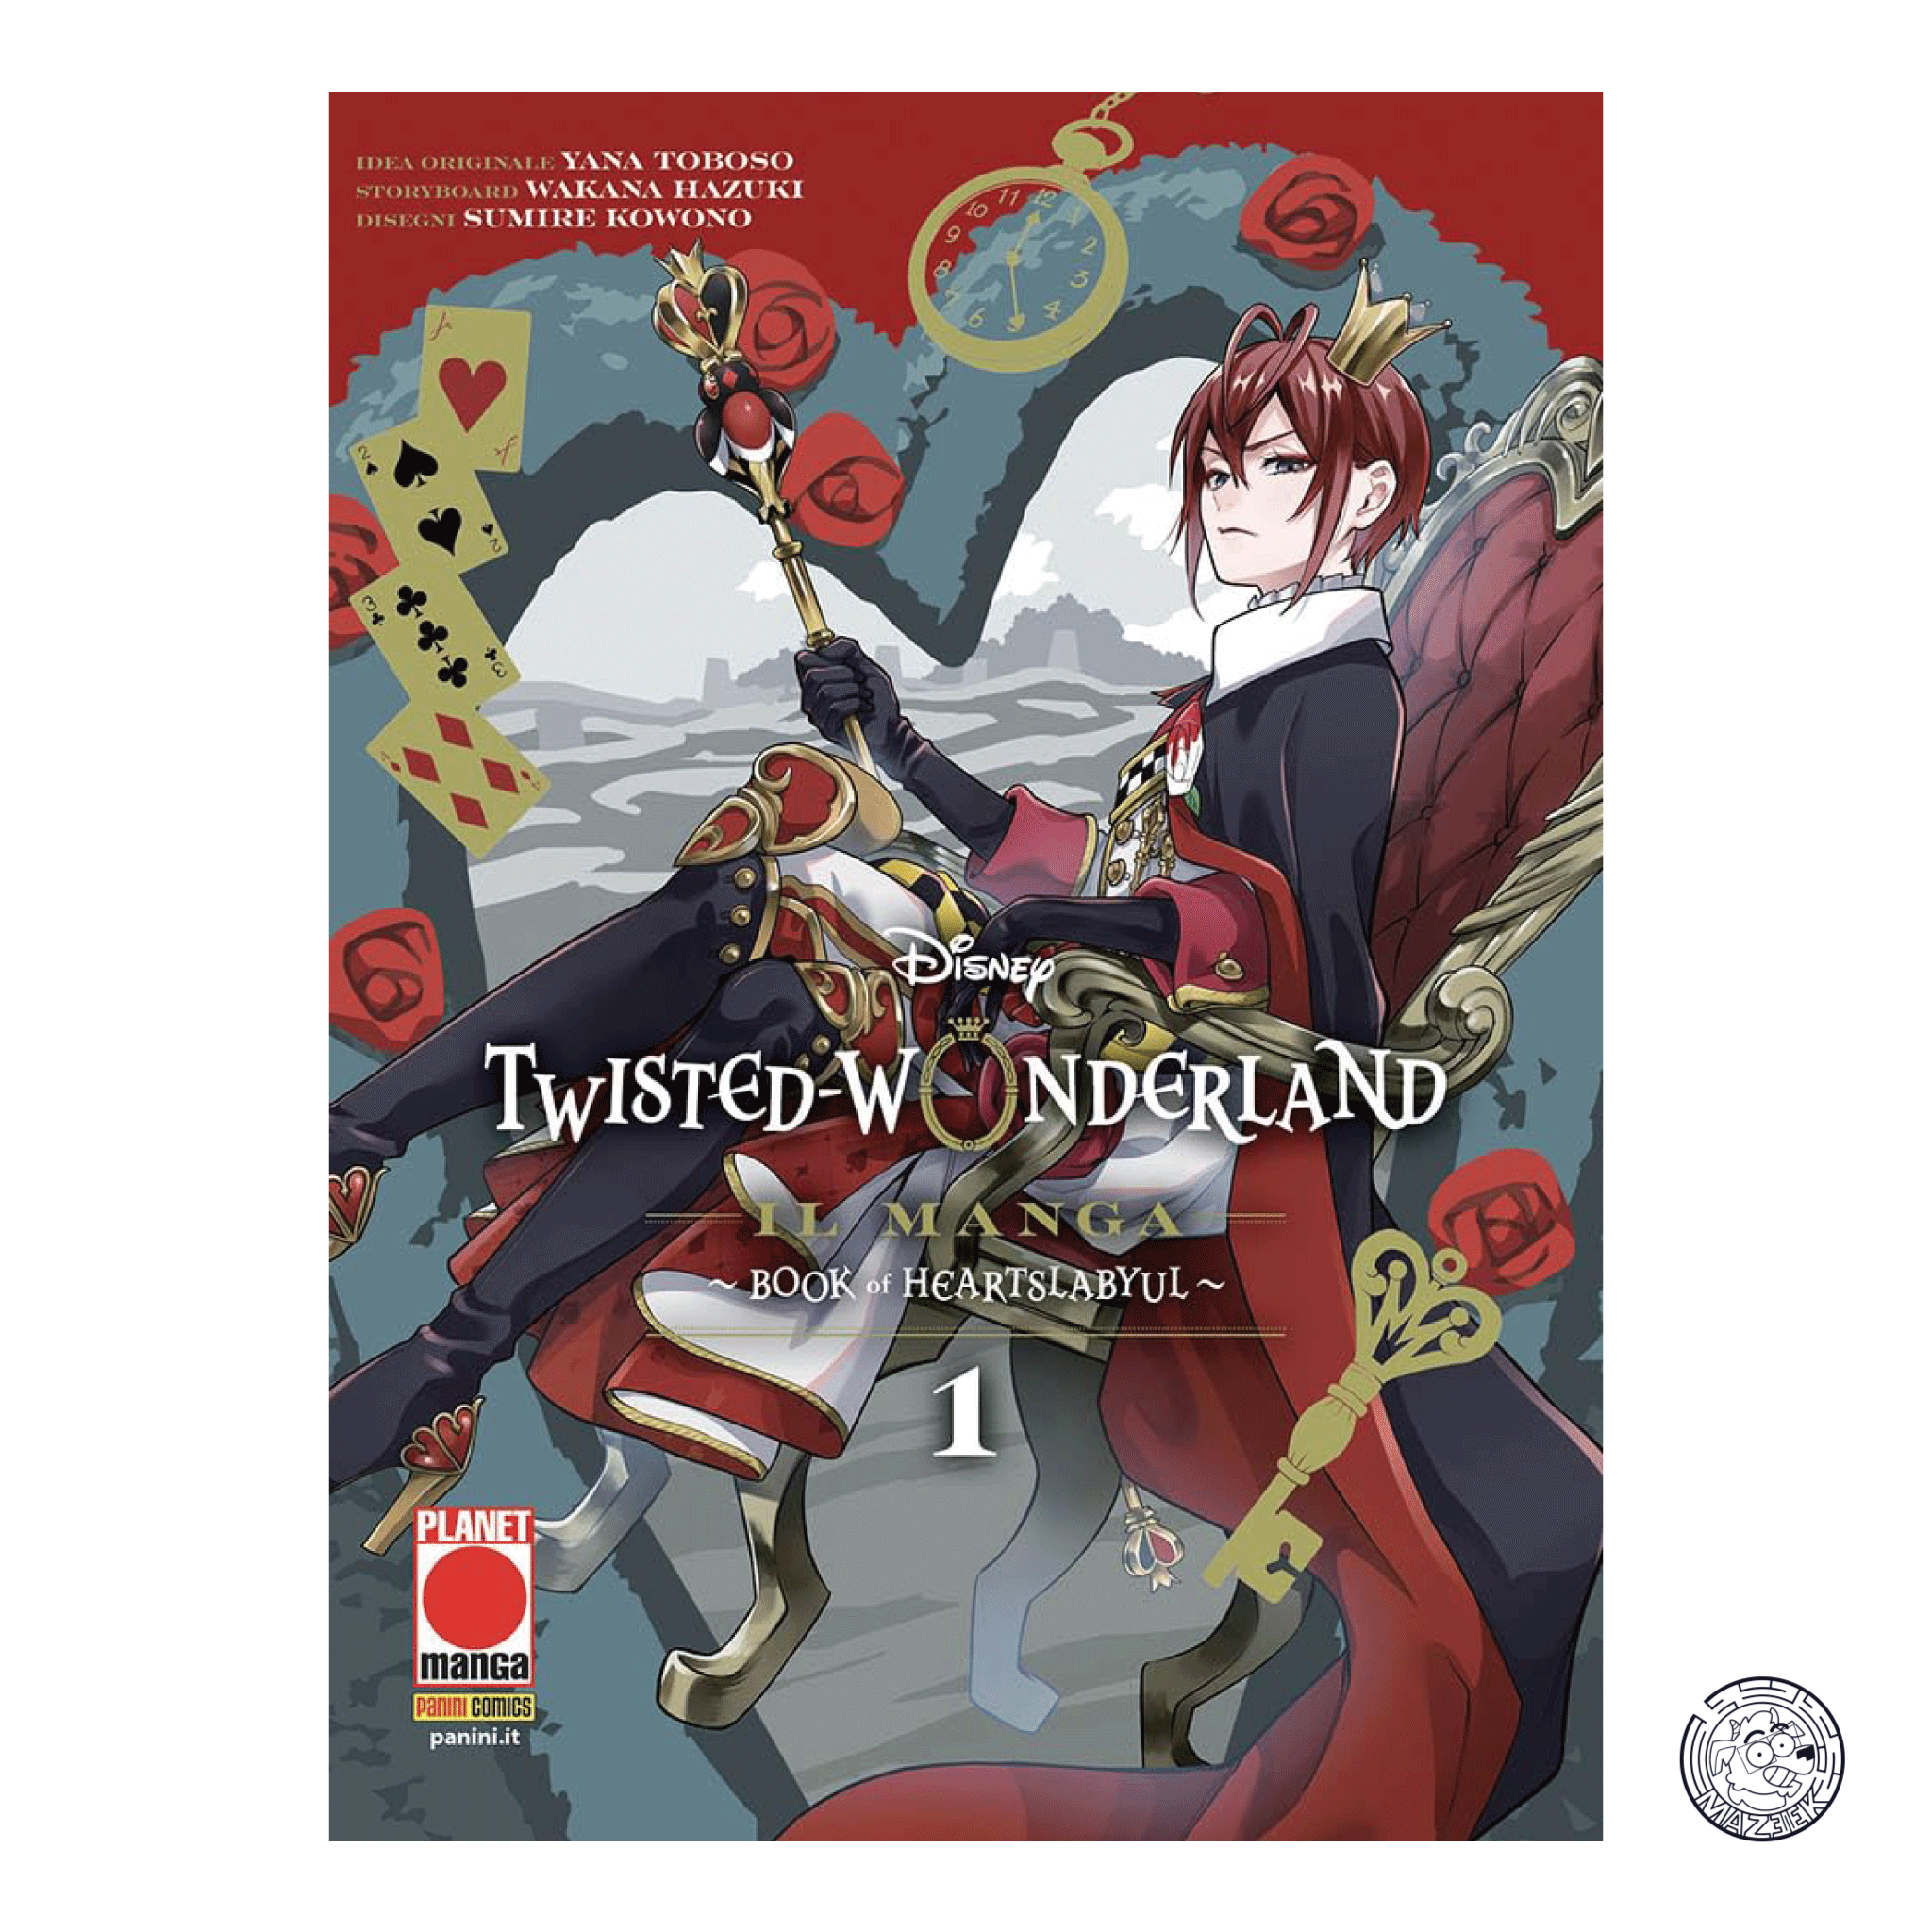 Twisted-Wonderland, The Manga: Book of Heartlabyul 01